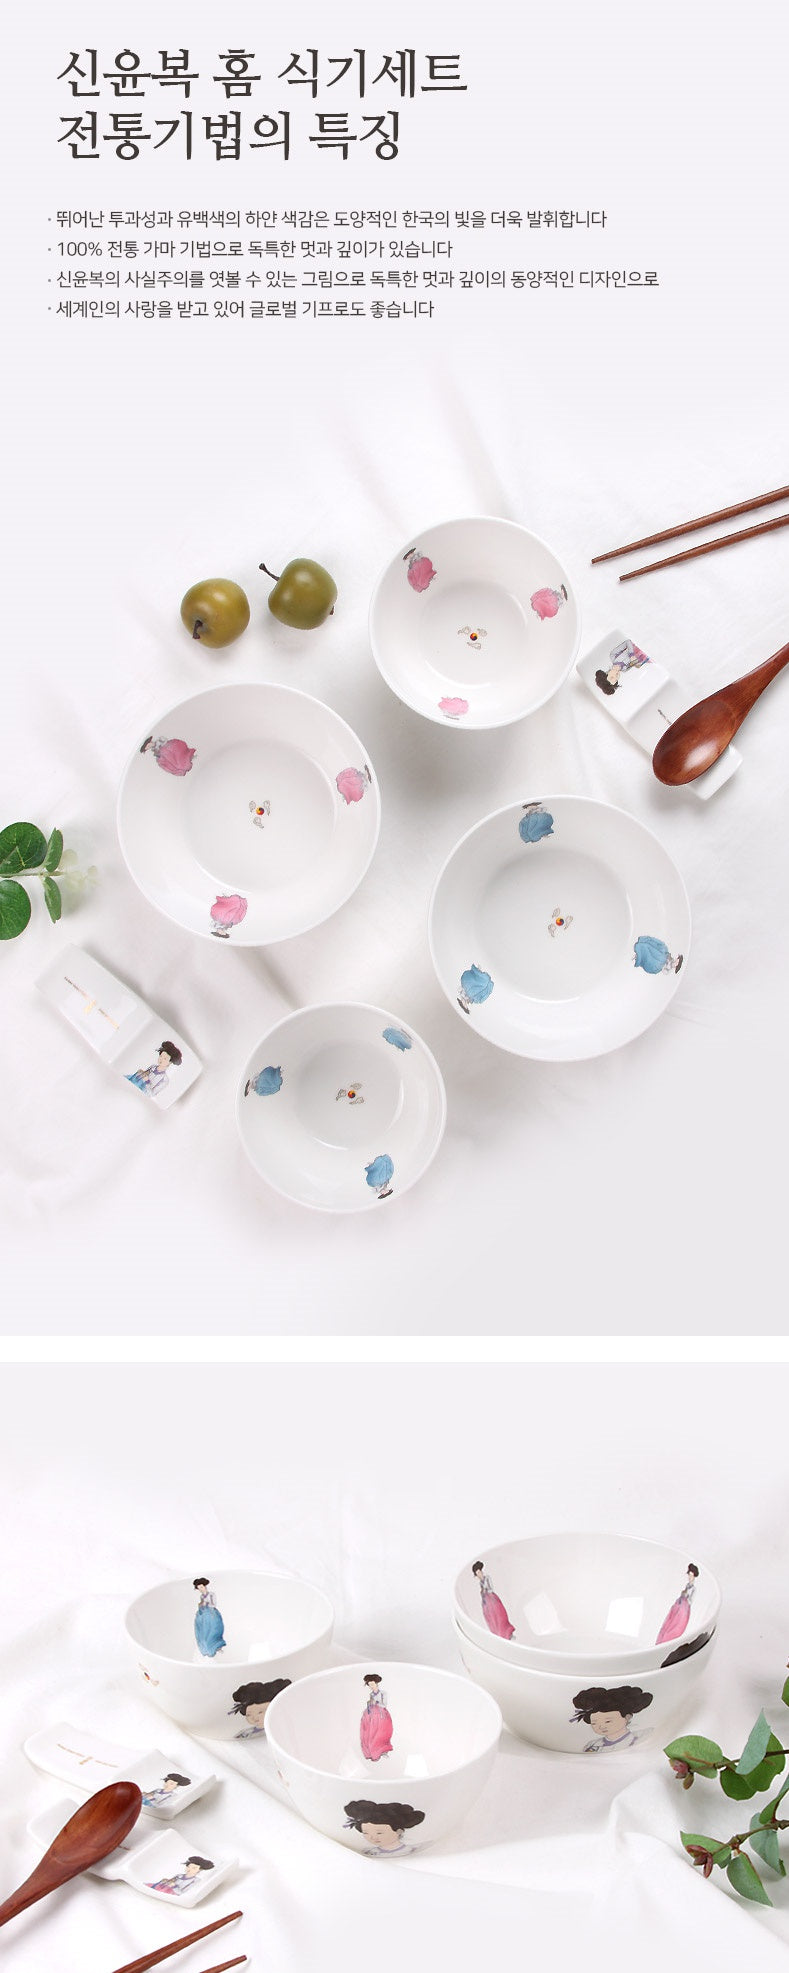 KUC Korean Unique Culture ShinYoonBok Ceramic Bowl Gift Sets 2 Persons